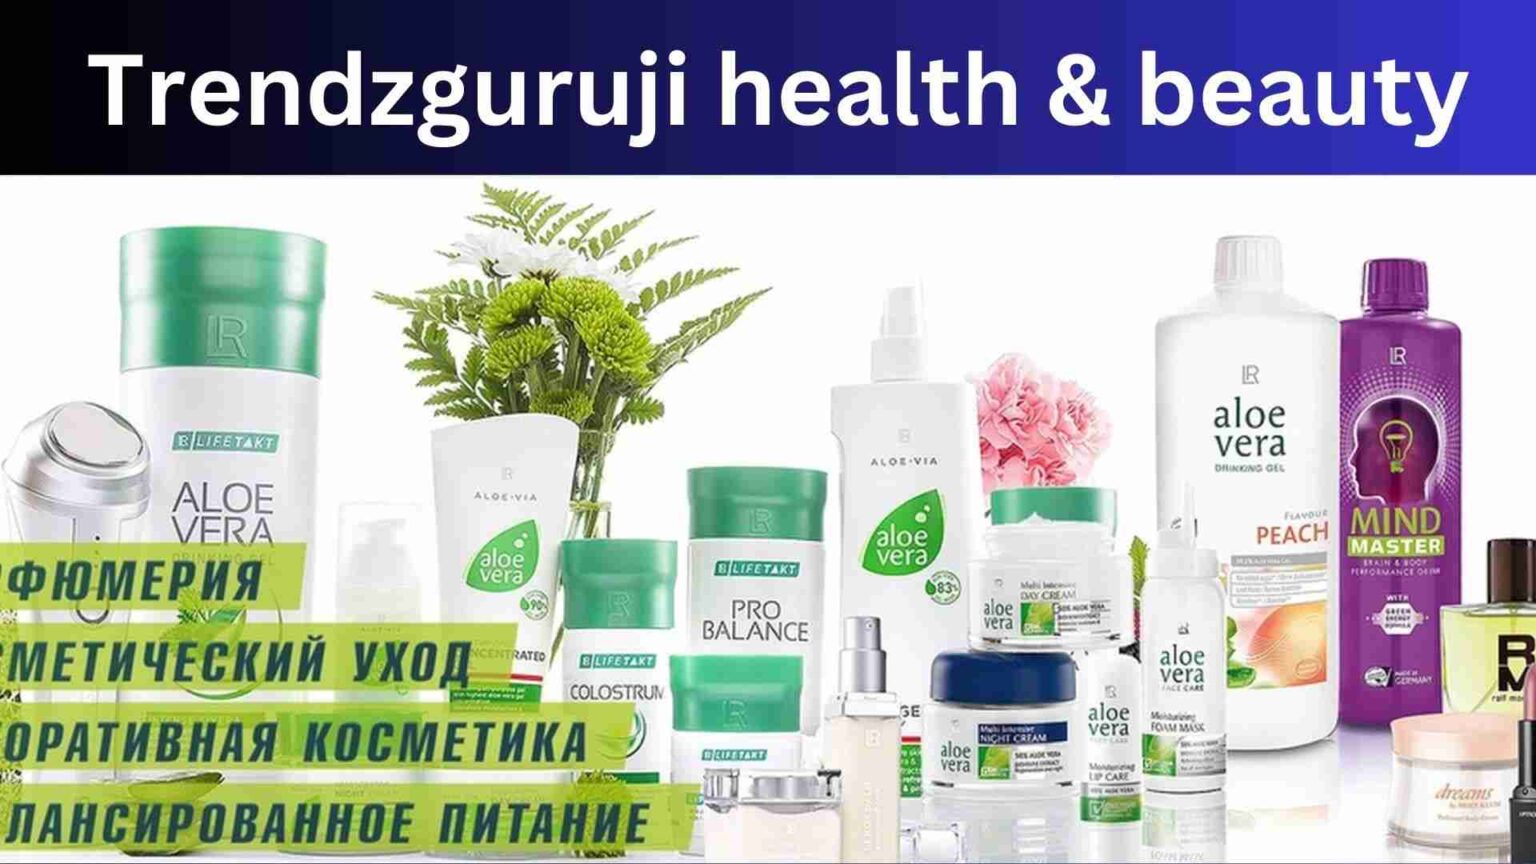 Trendzguruji health & beauty